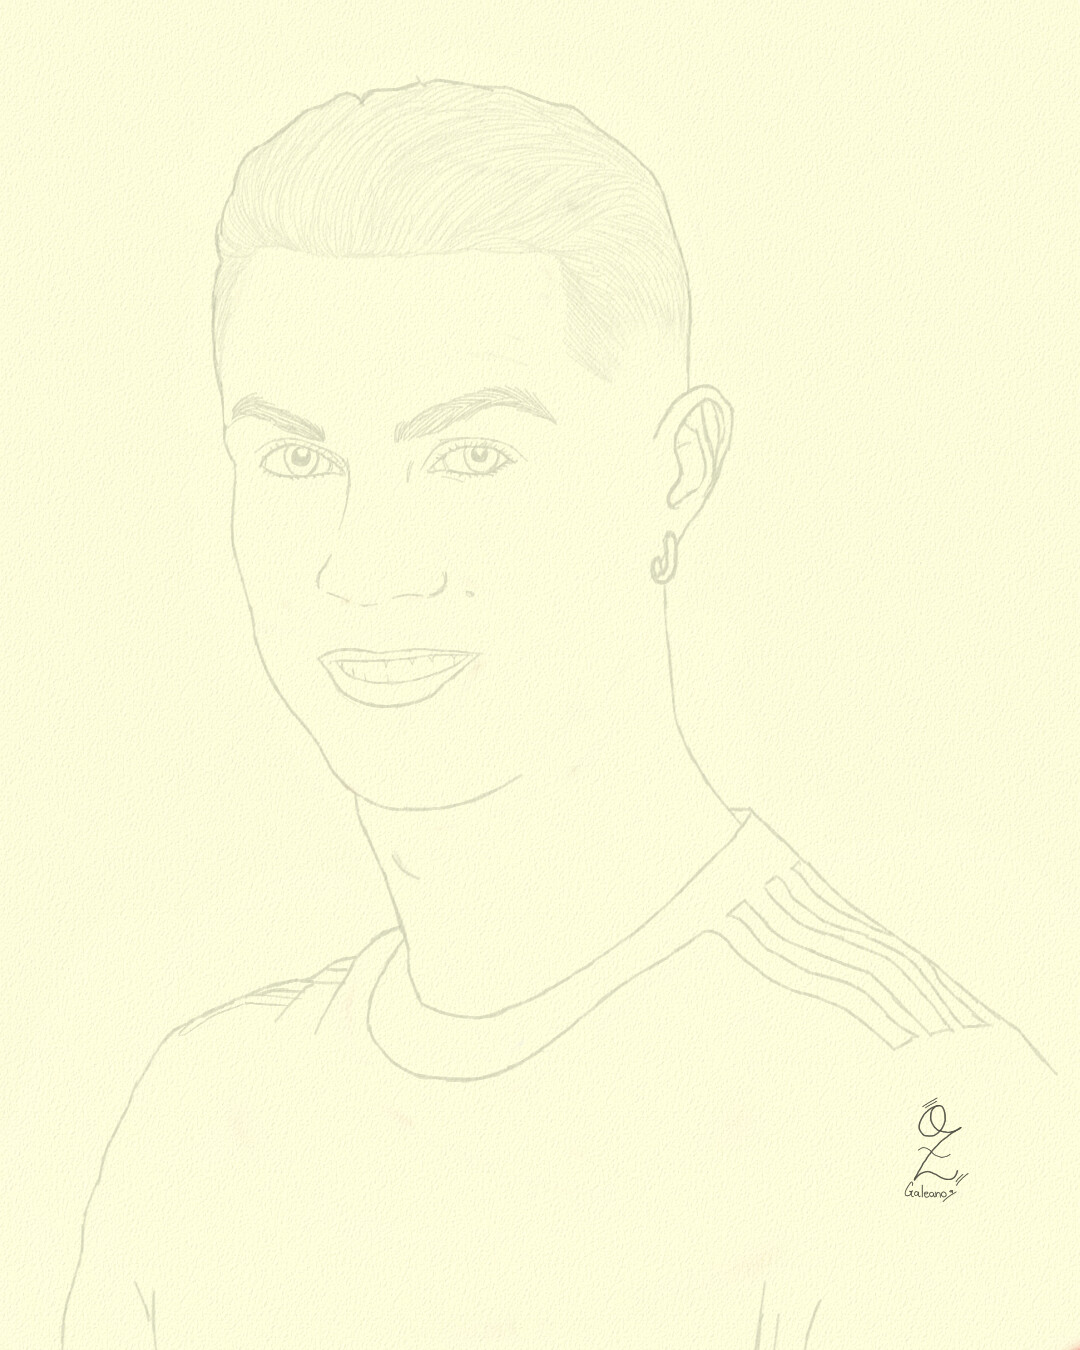 Portrait of Cristiano Ronaldo by Sergio Ingravalle on Dribbble